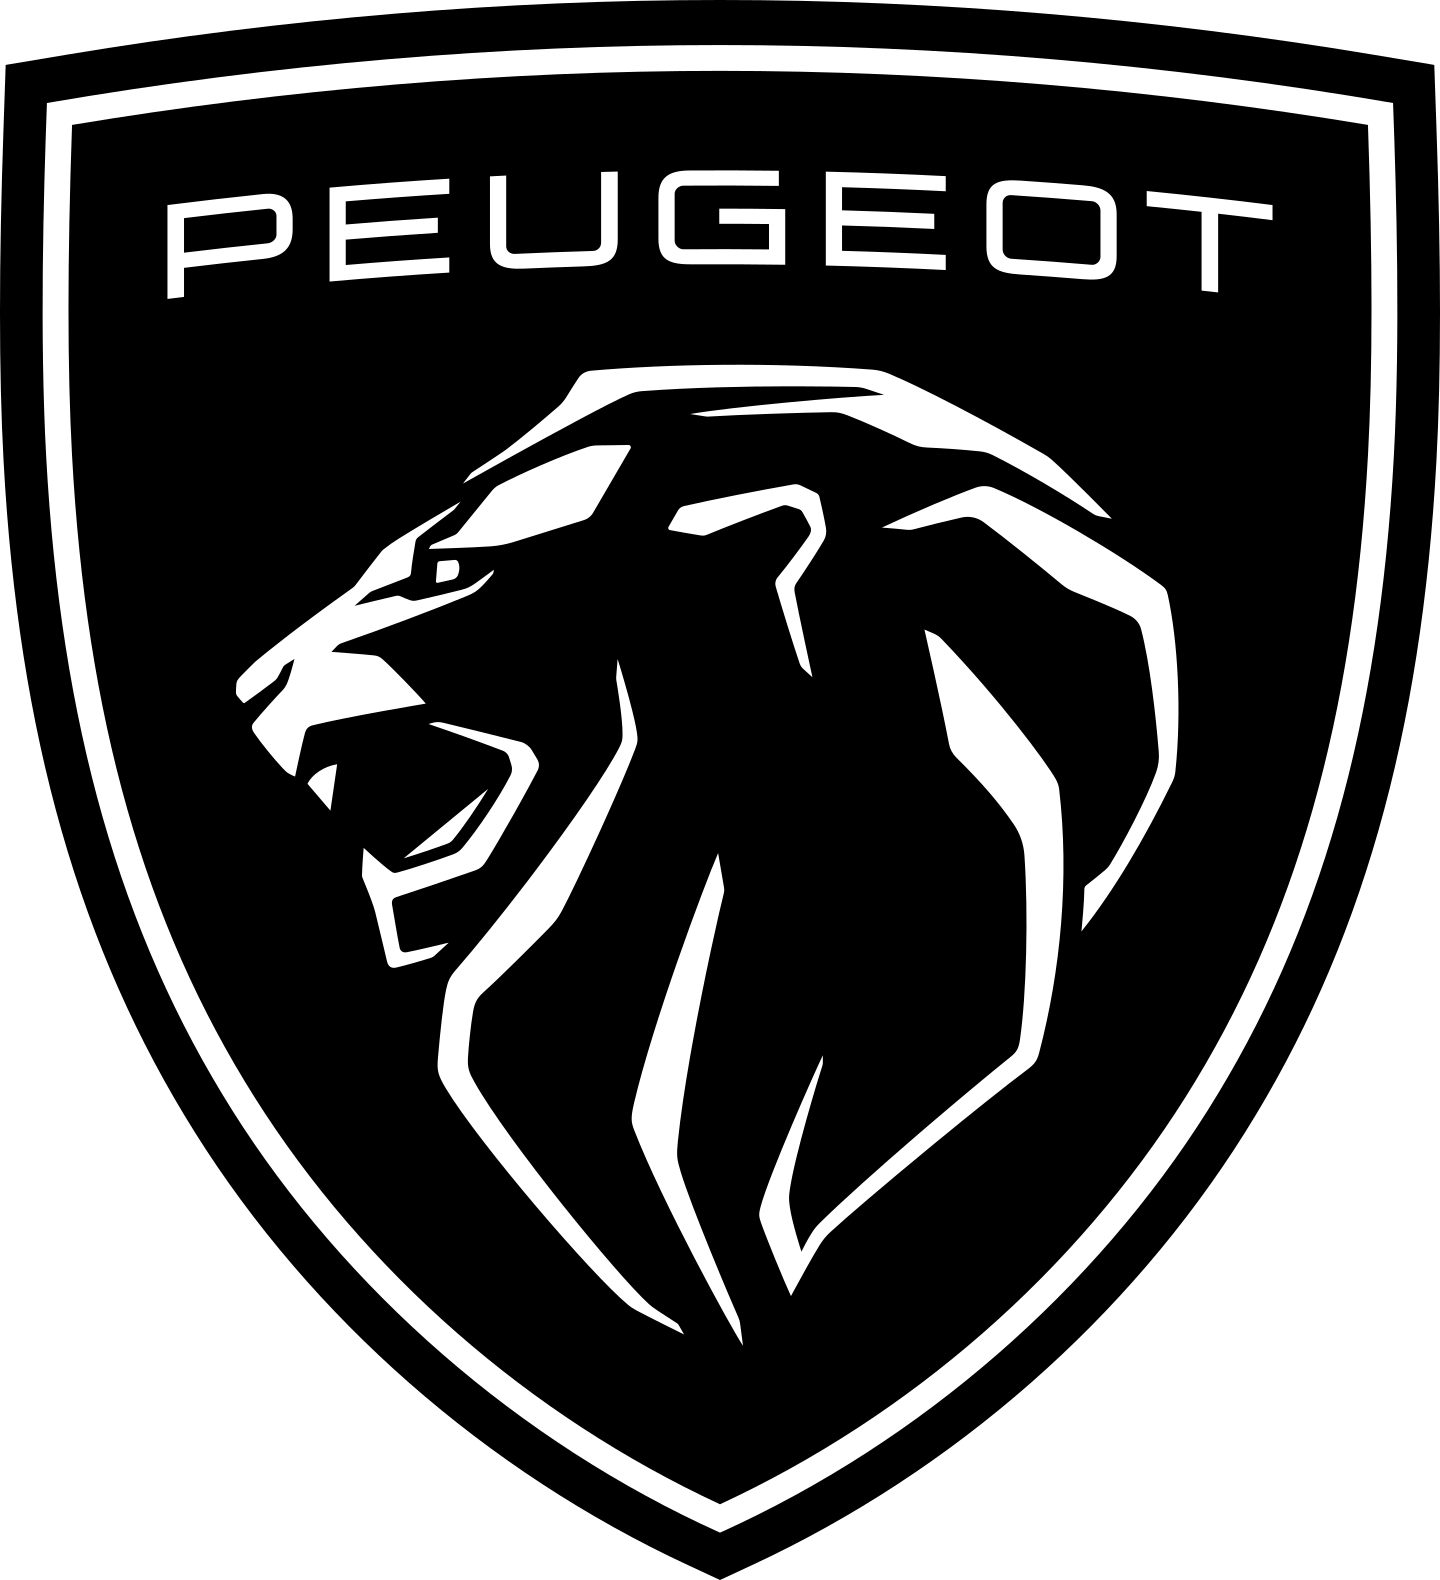 peugeot logo 2 1 - Peugeot Logo